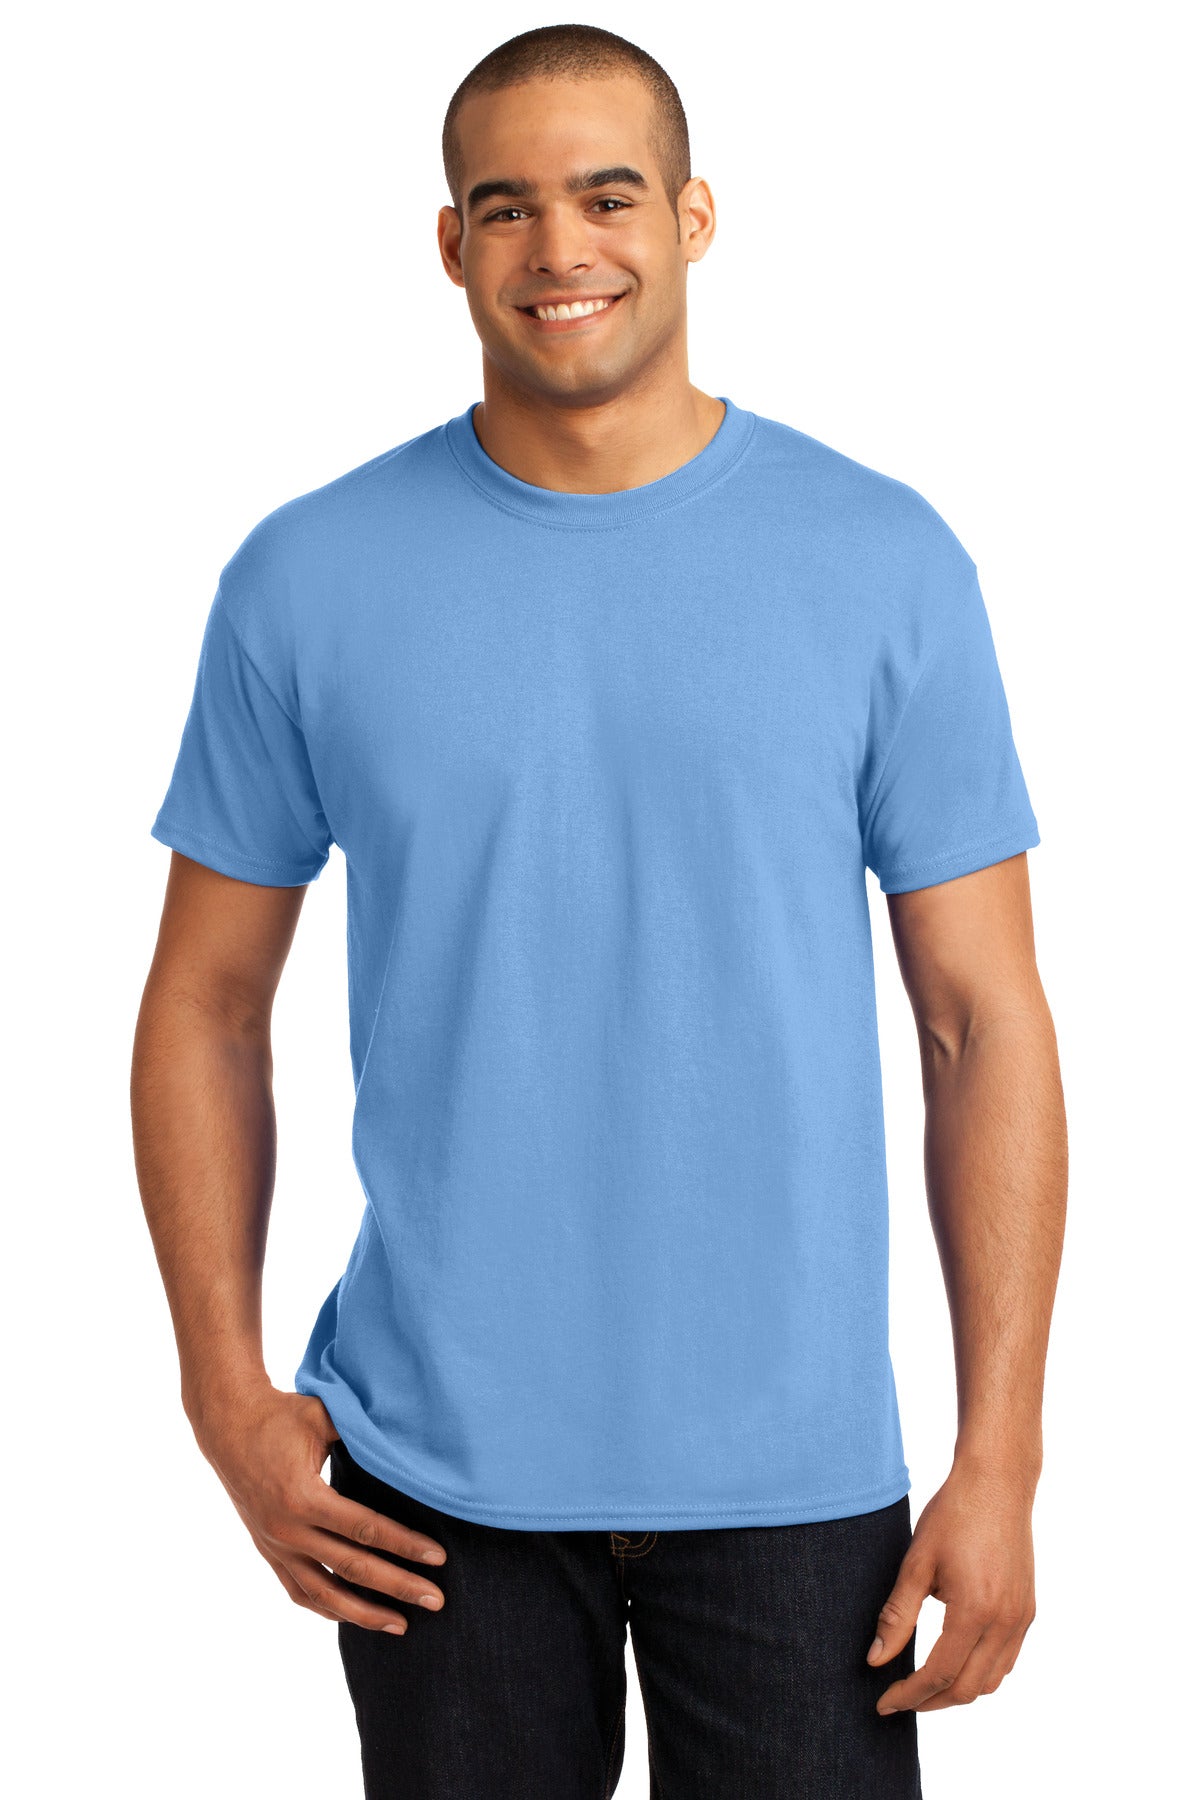 T-Shirts Carolina Blue Hanes